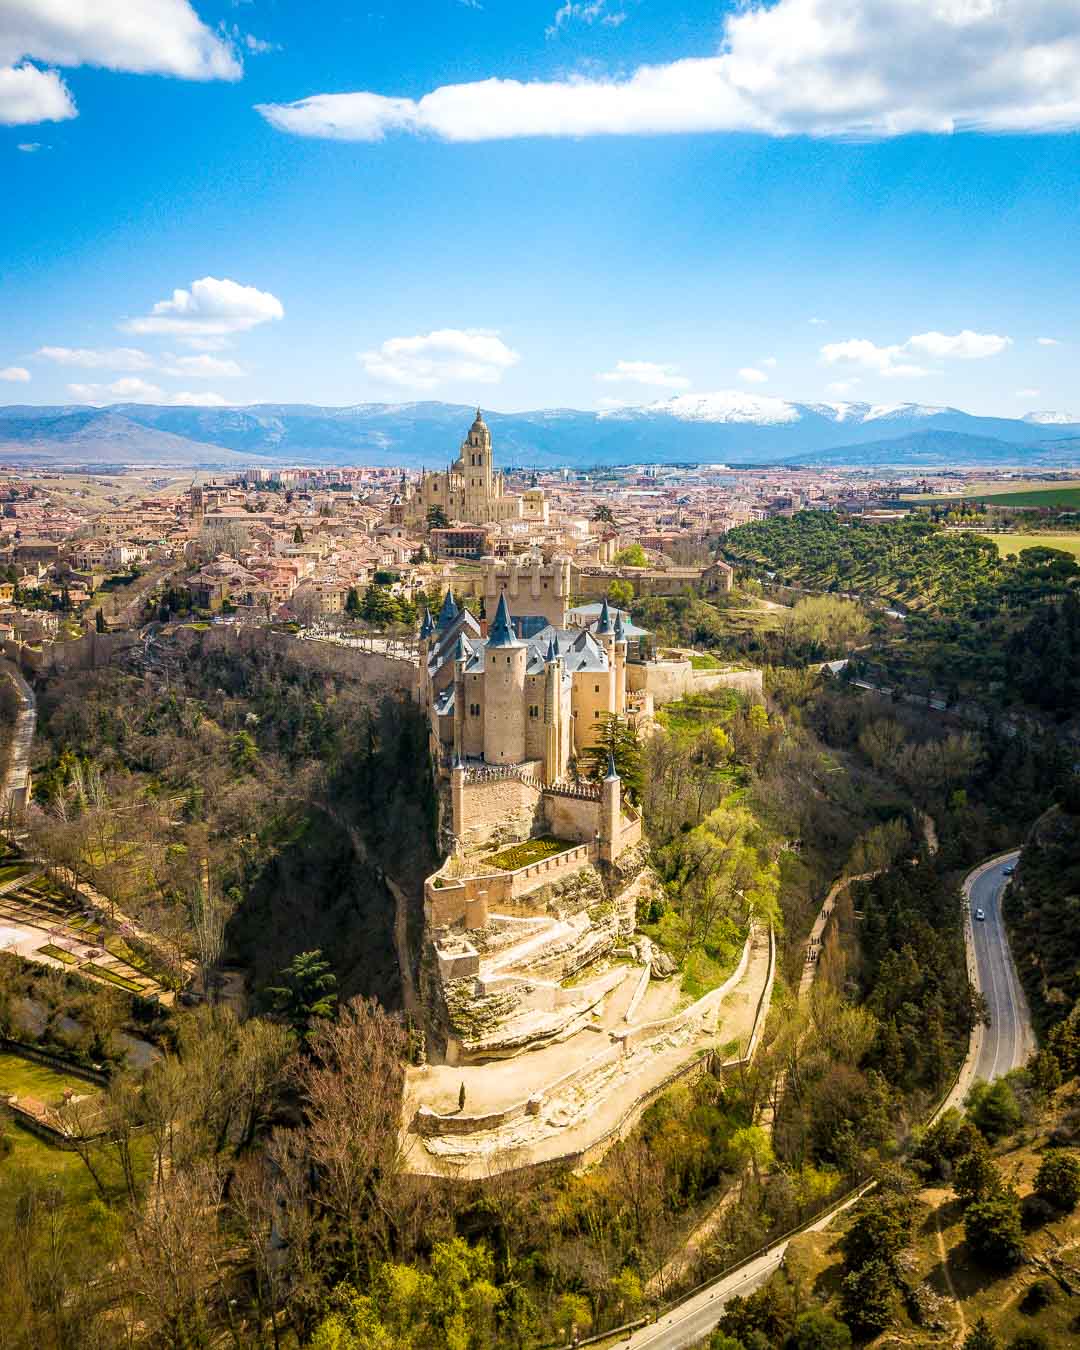 Alcazar de Segovia  The Walt Disney Castle in Segovia, Spain